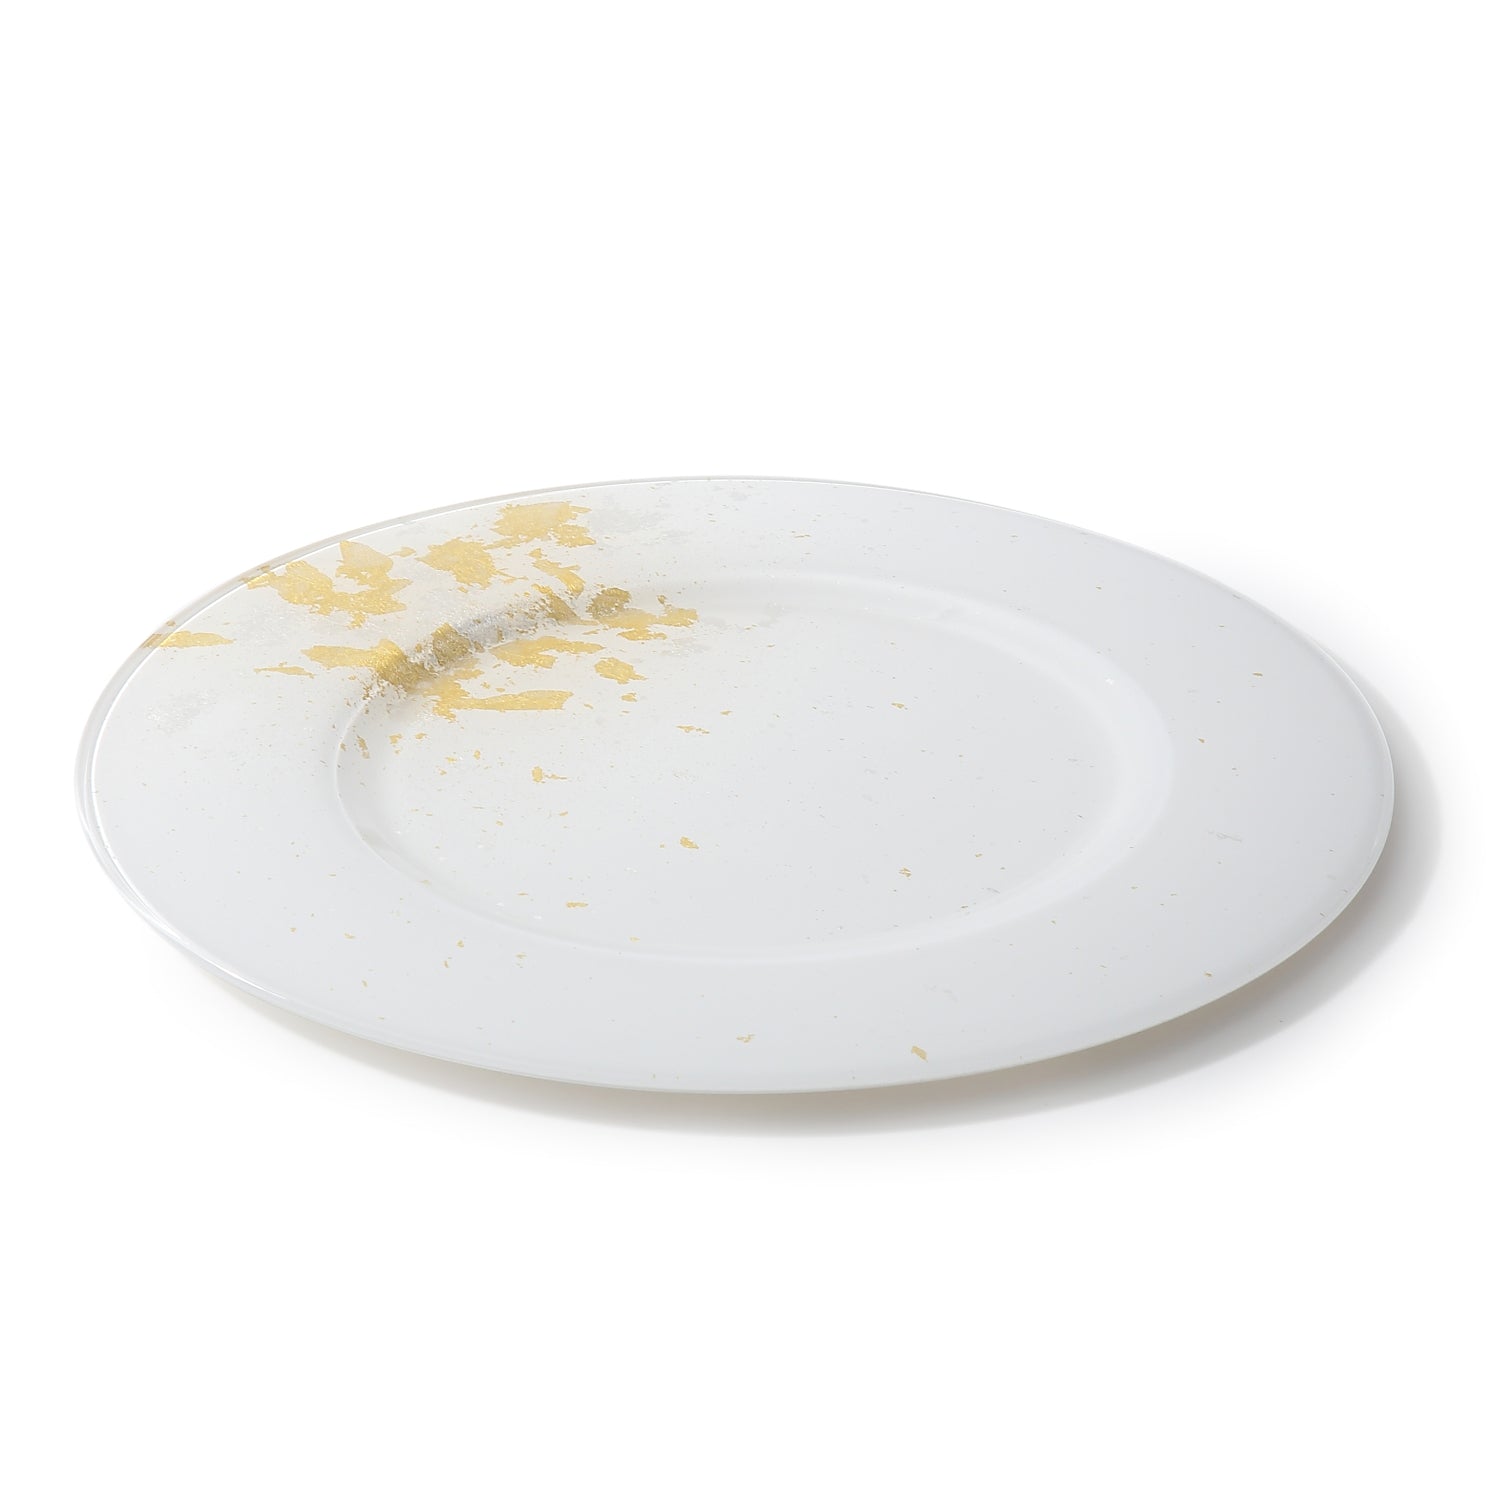 Syosaku Japanese Urushi Glass Charger Plate 13.9-inch (35cm) Pure White with Gold Leaf, Dishwasher Safe